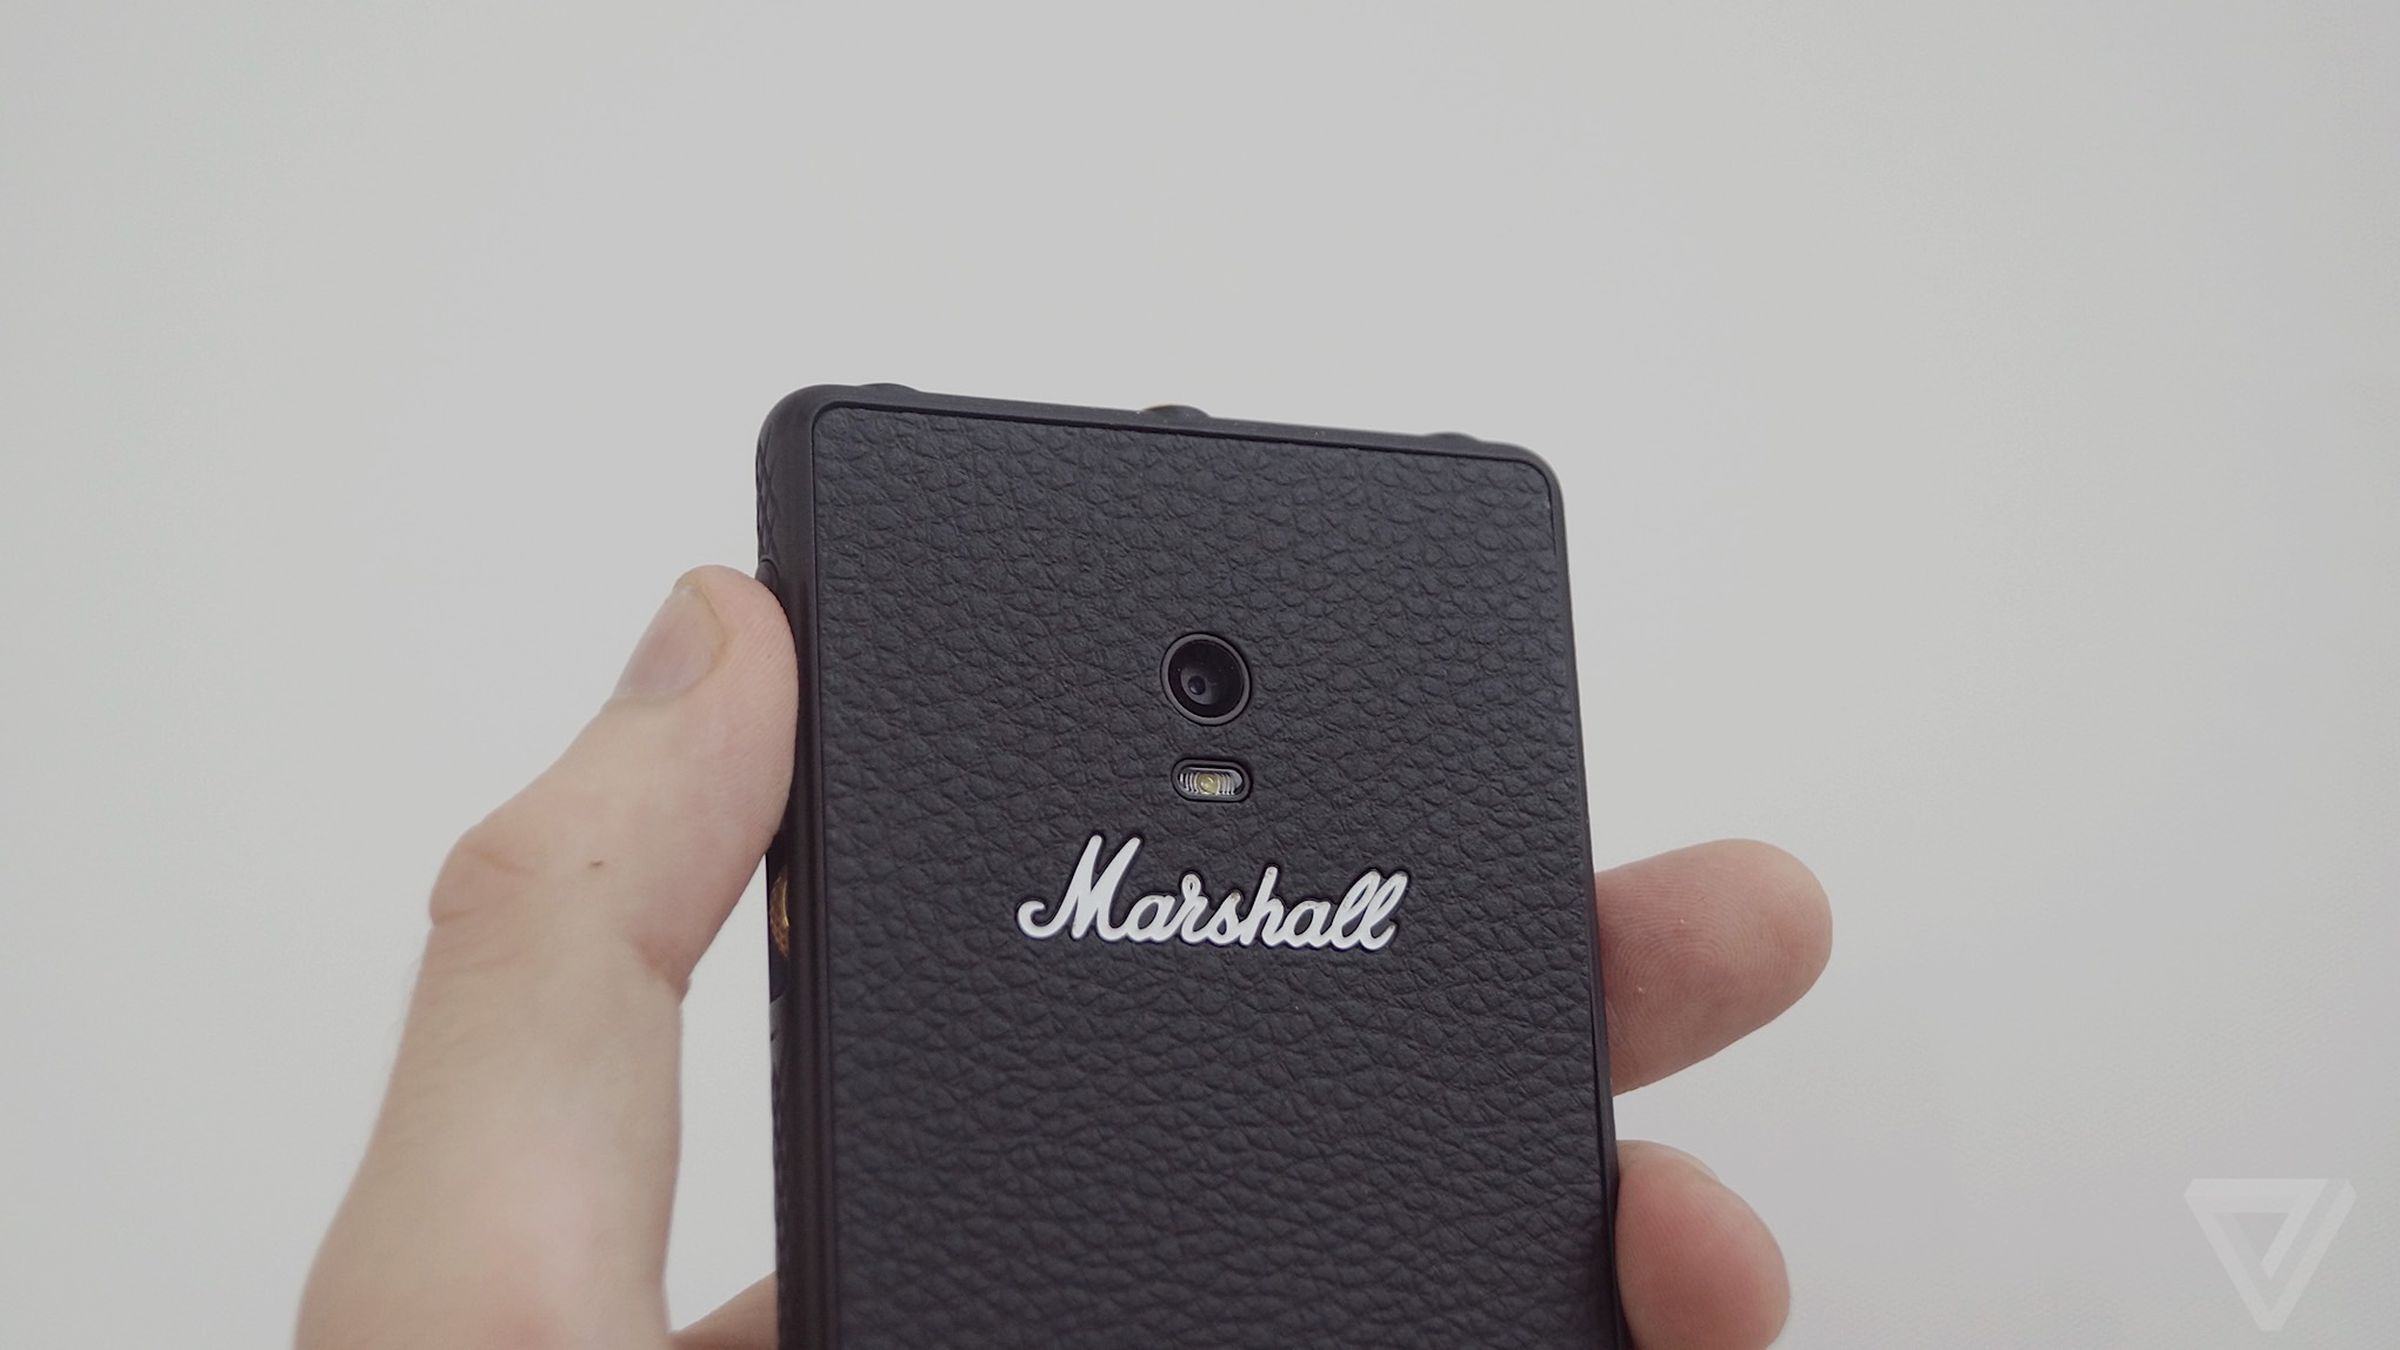 Marshall's London smartphone